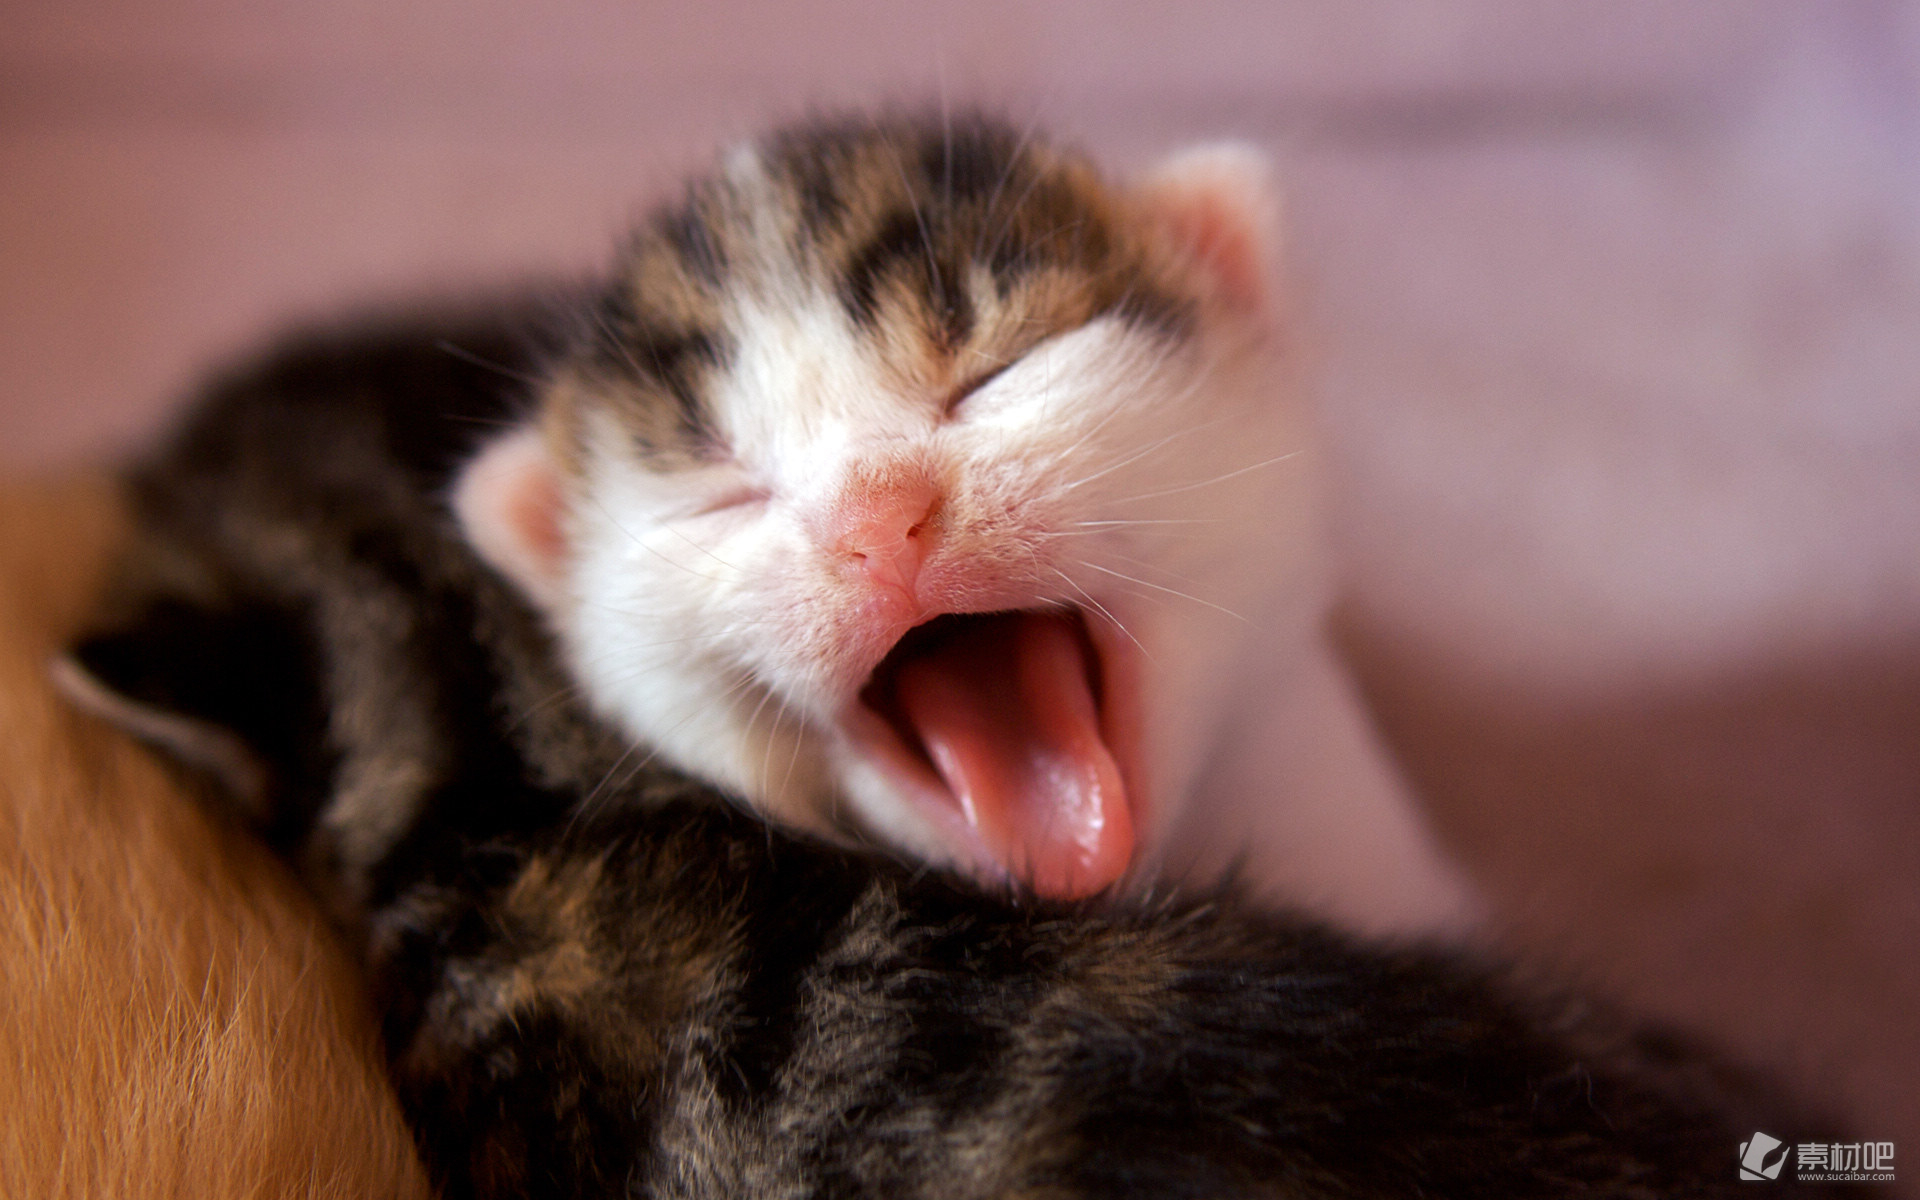 Free Images : cute, pet, portrait, sleeping, feline, tabby, nap ...